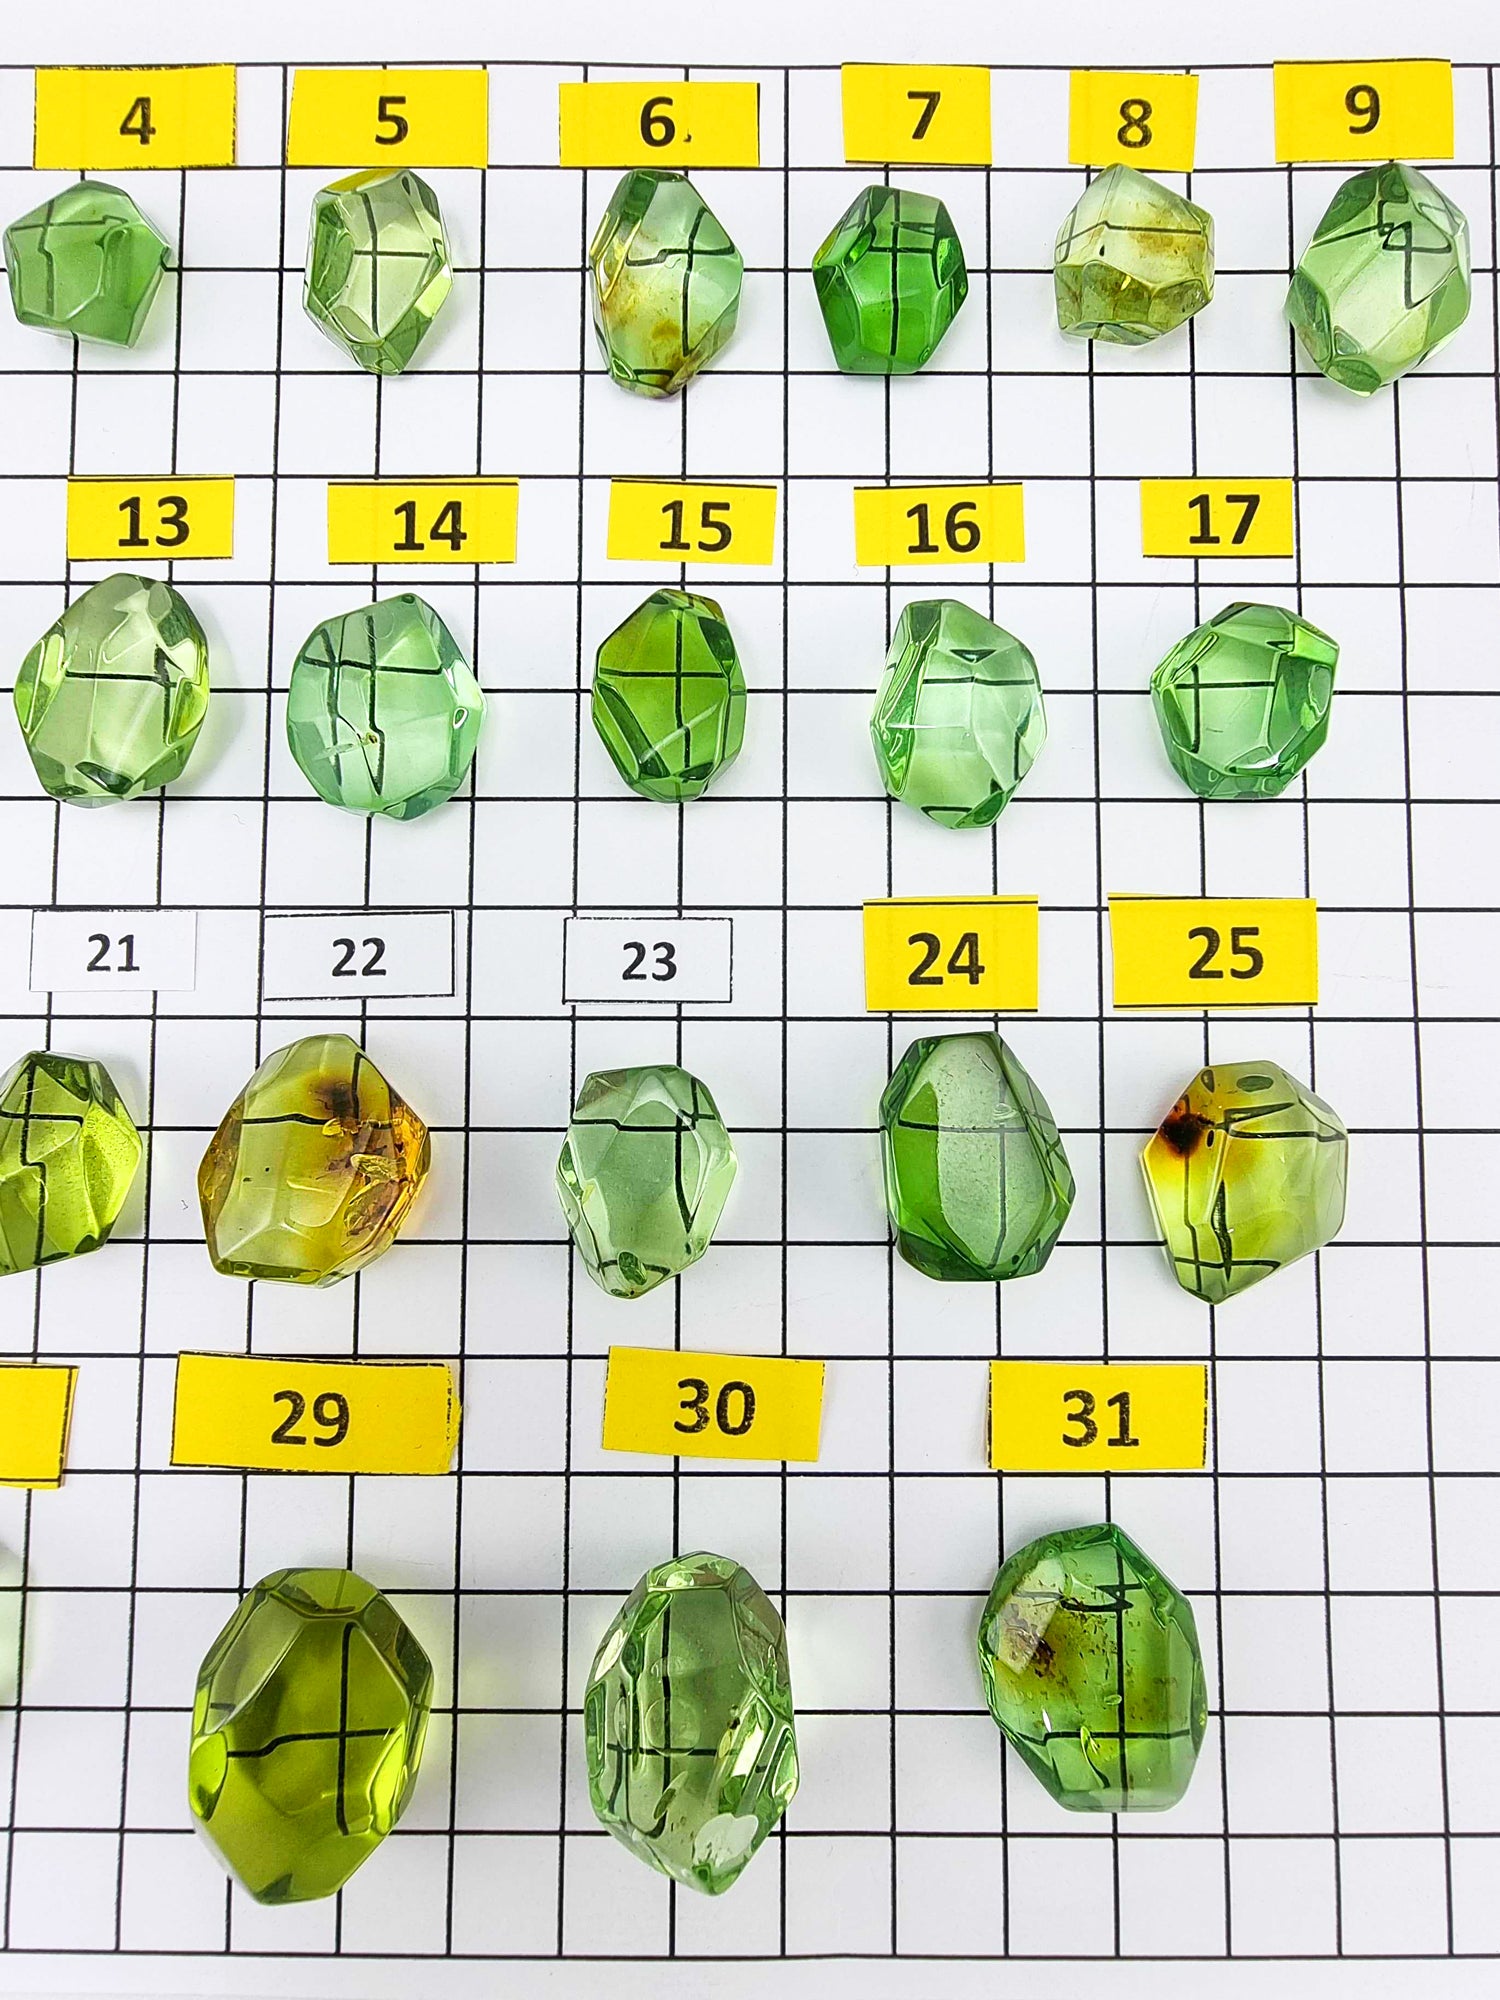 Green Amber Crystal Cut Stone